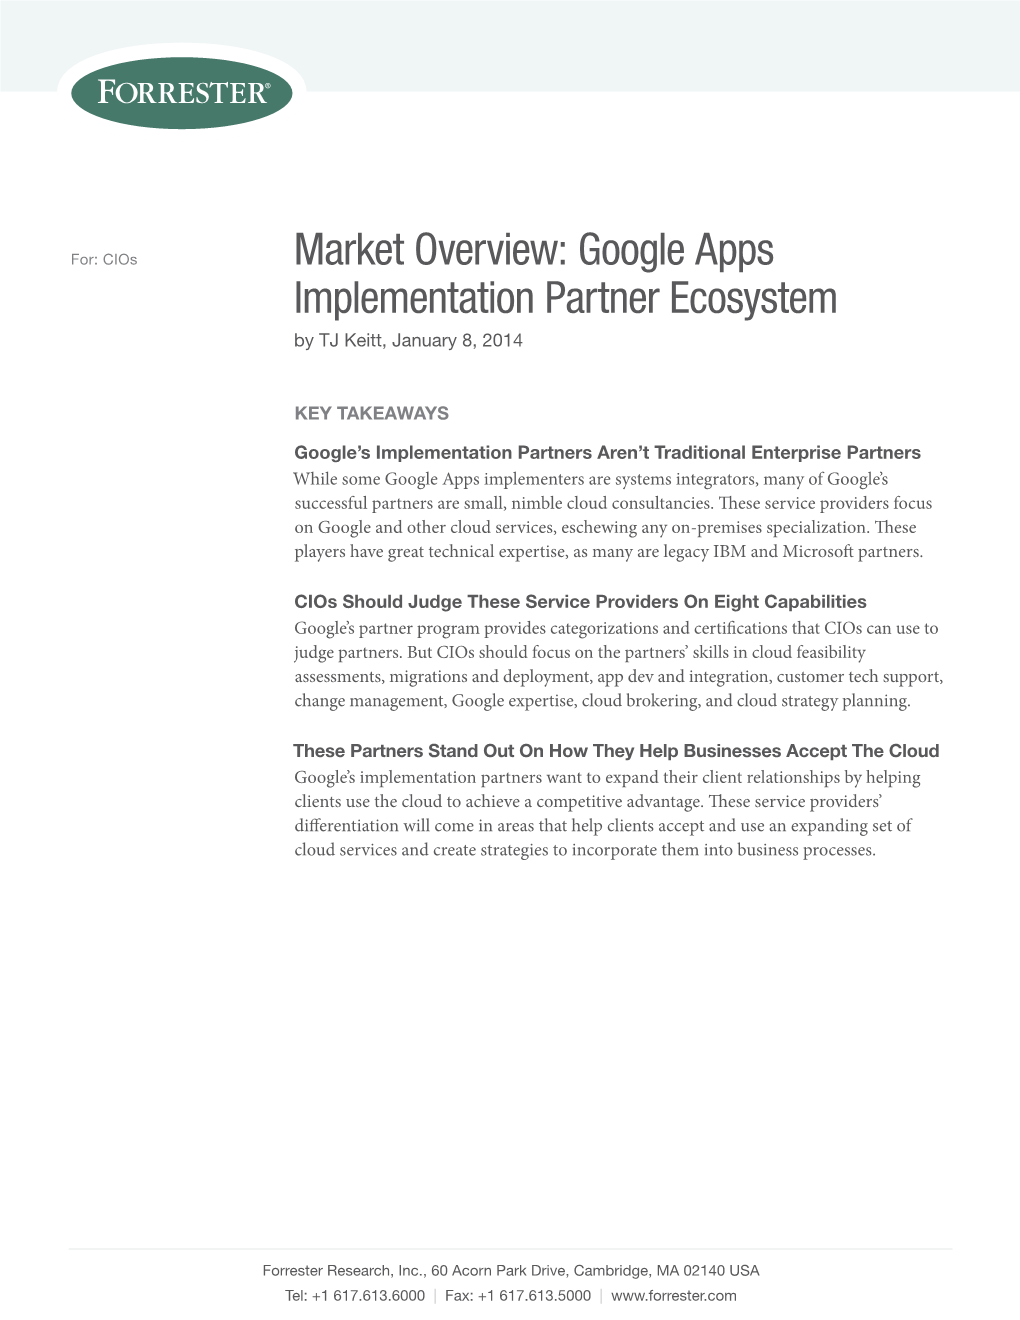 Google Apps Implementation Partner Ecosystem by TJ Keitt, January 8, 2014